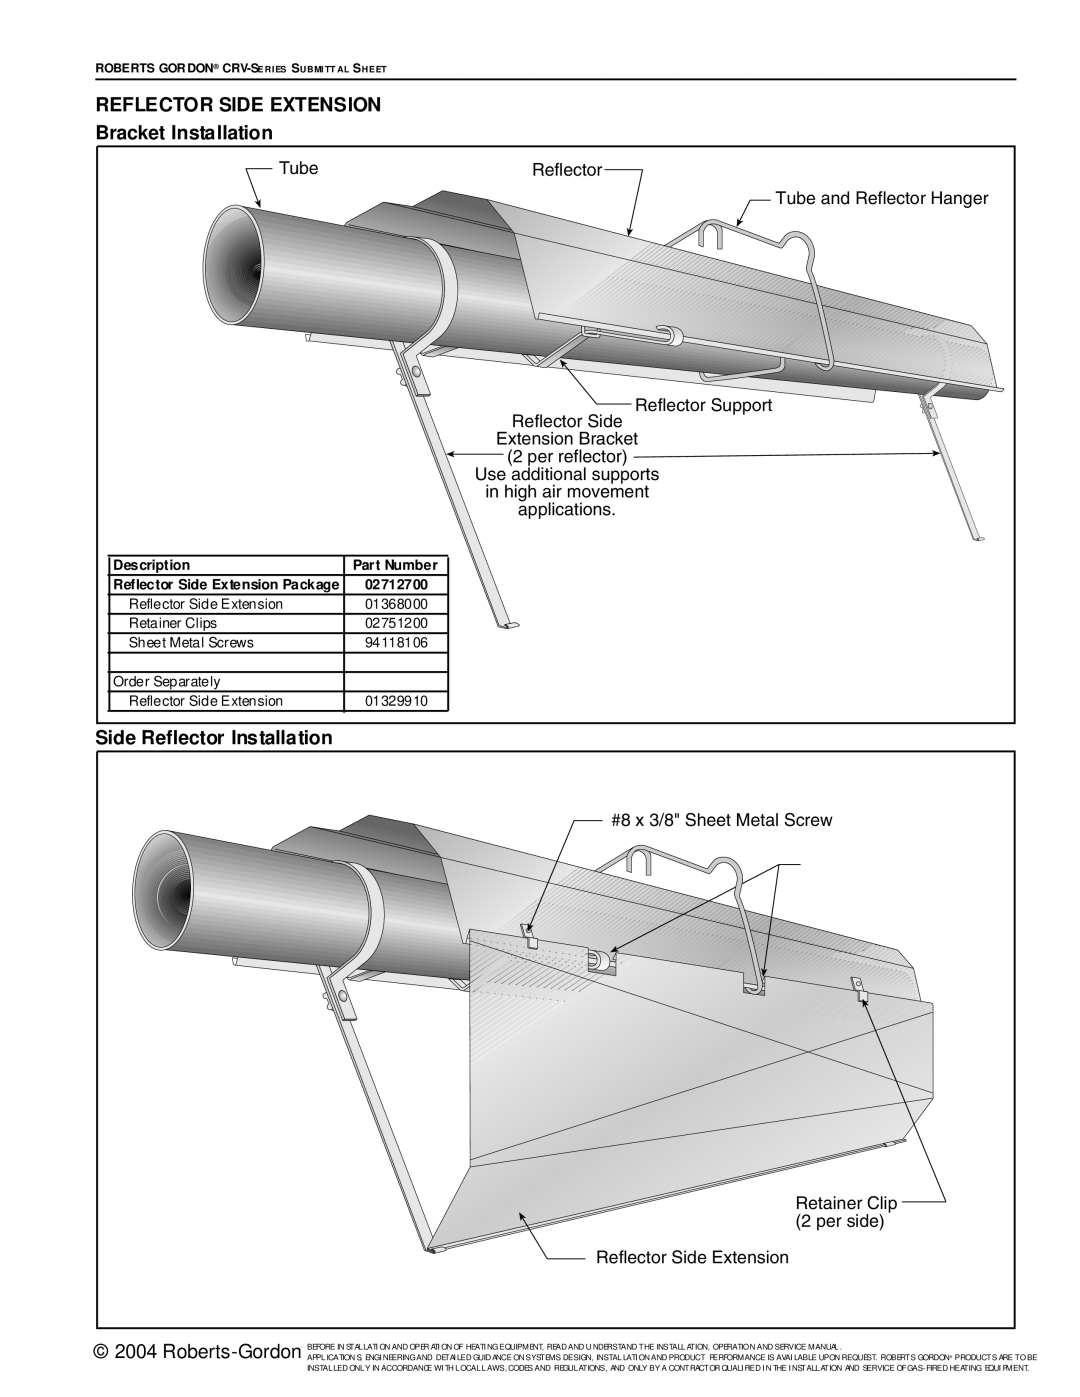 Roberts Gorden CRV-Series service manual Reflector Side Extension, Bracket Installation, Side Reflector Installation 